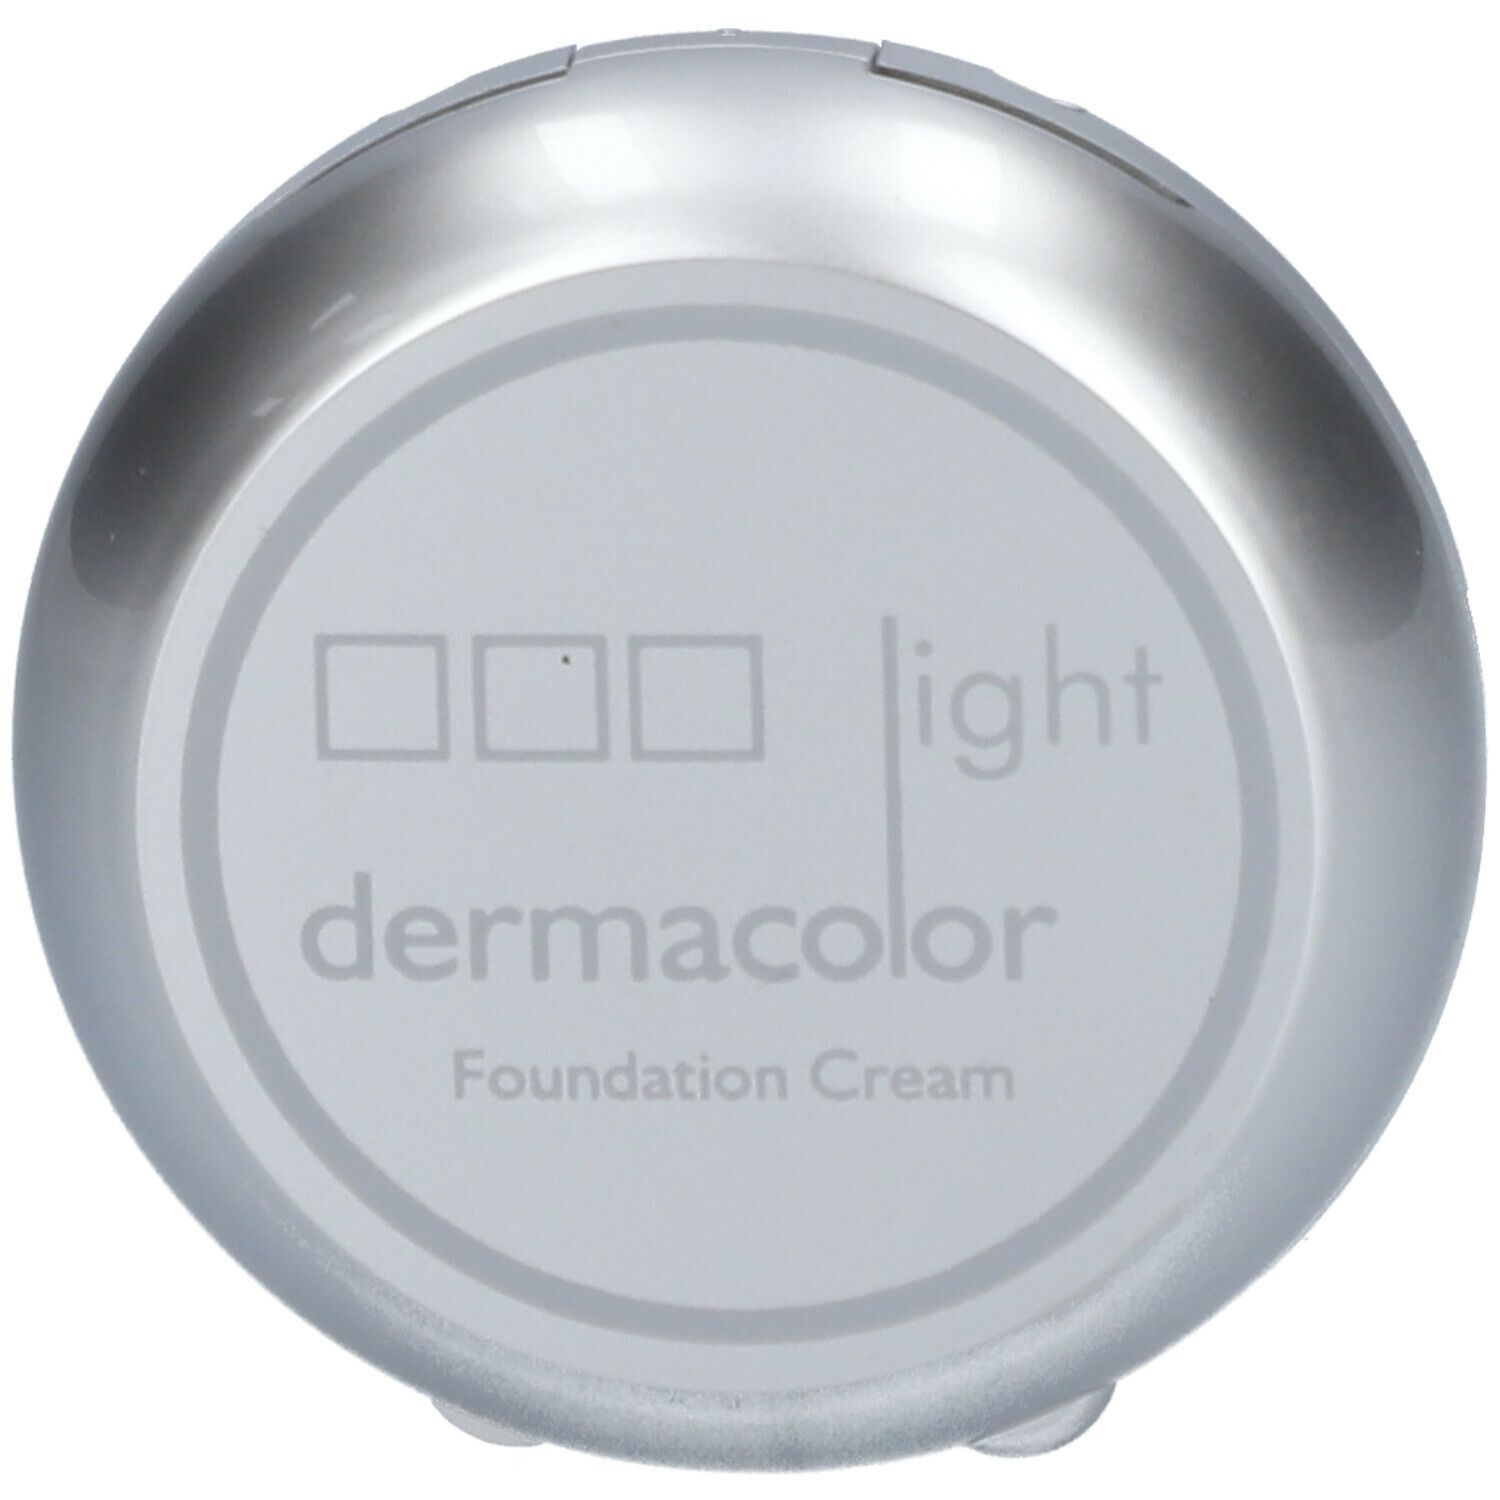 Dermacolor light Foundation Cream A 6